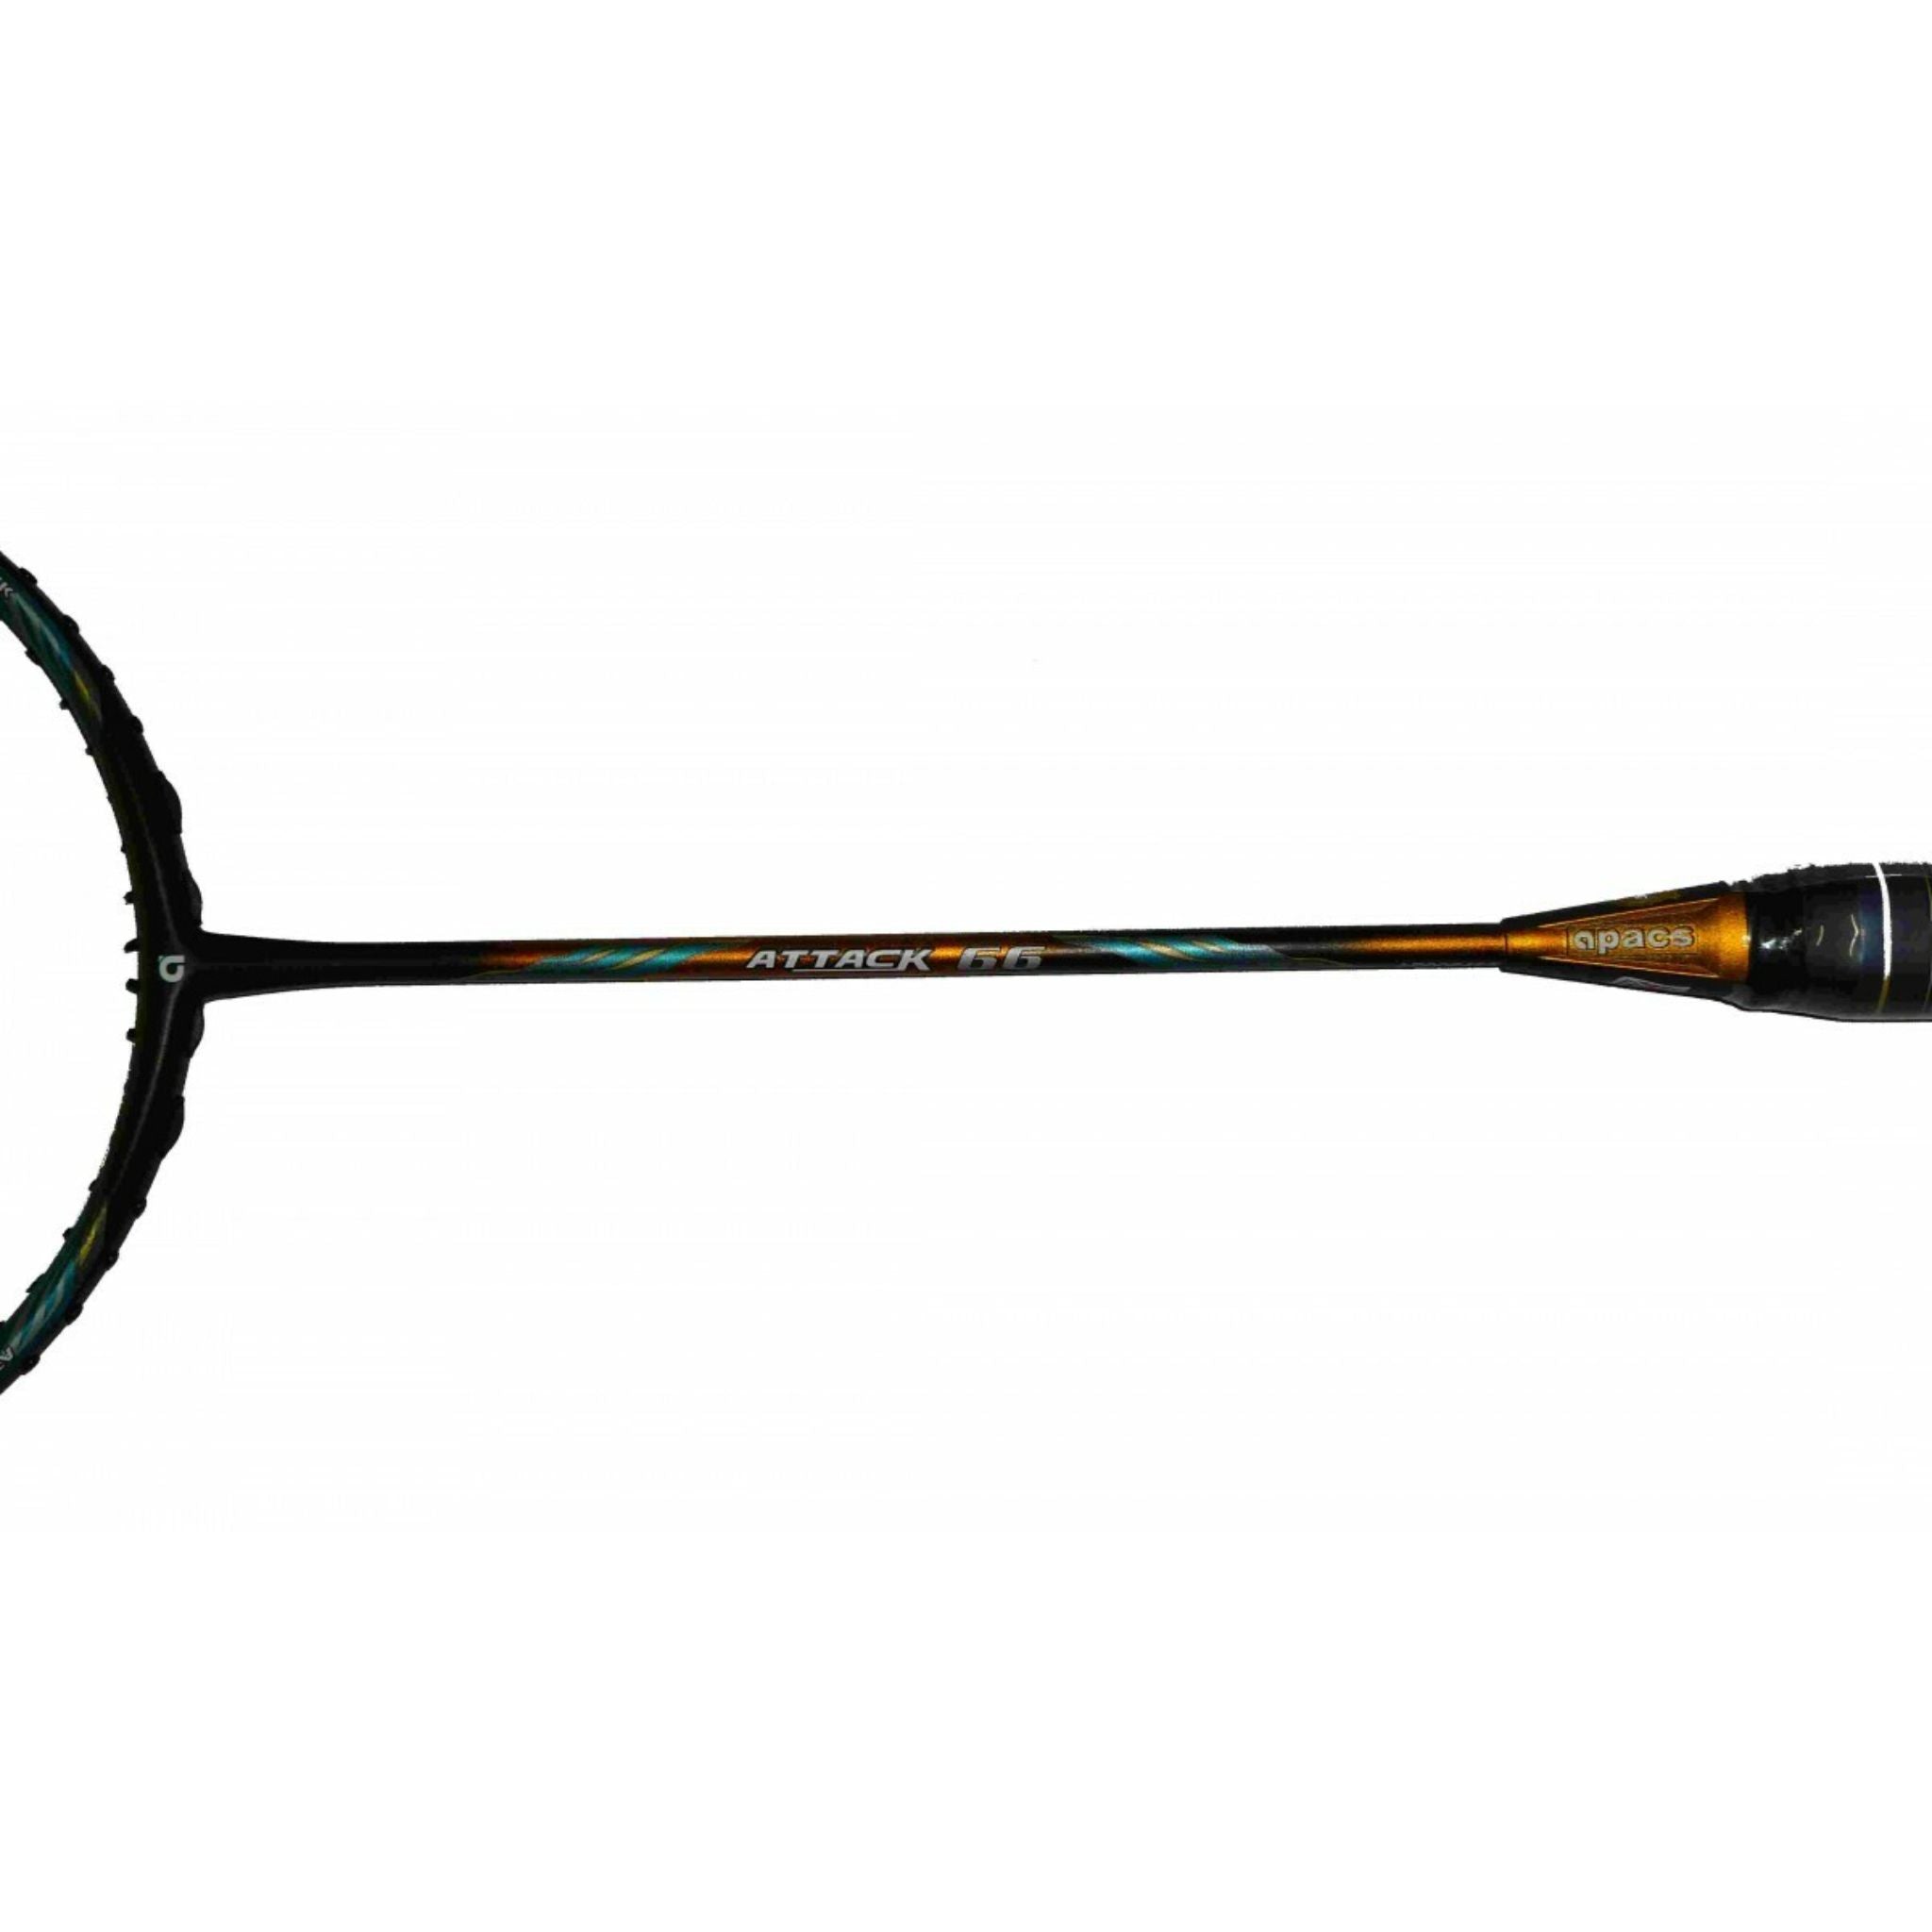 APACS Attack 66 Badminton Racket